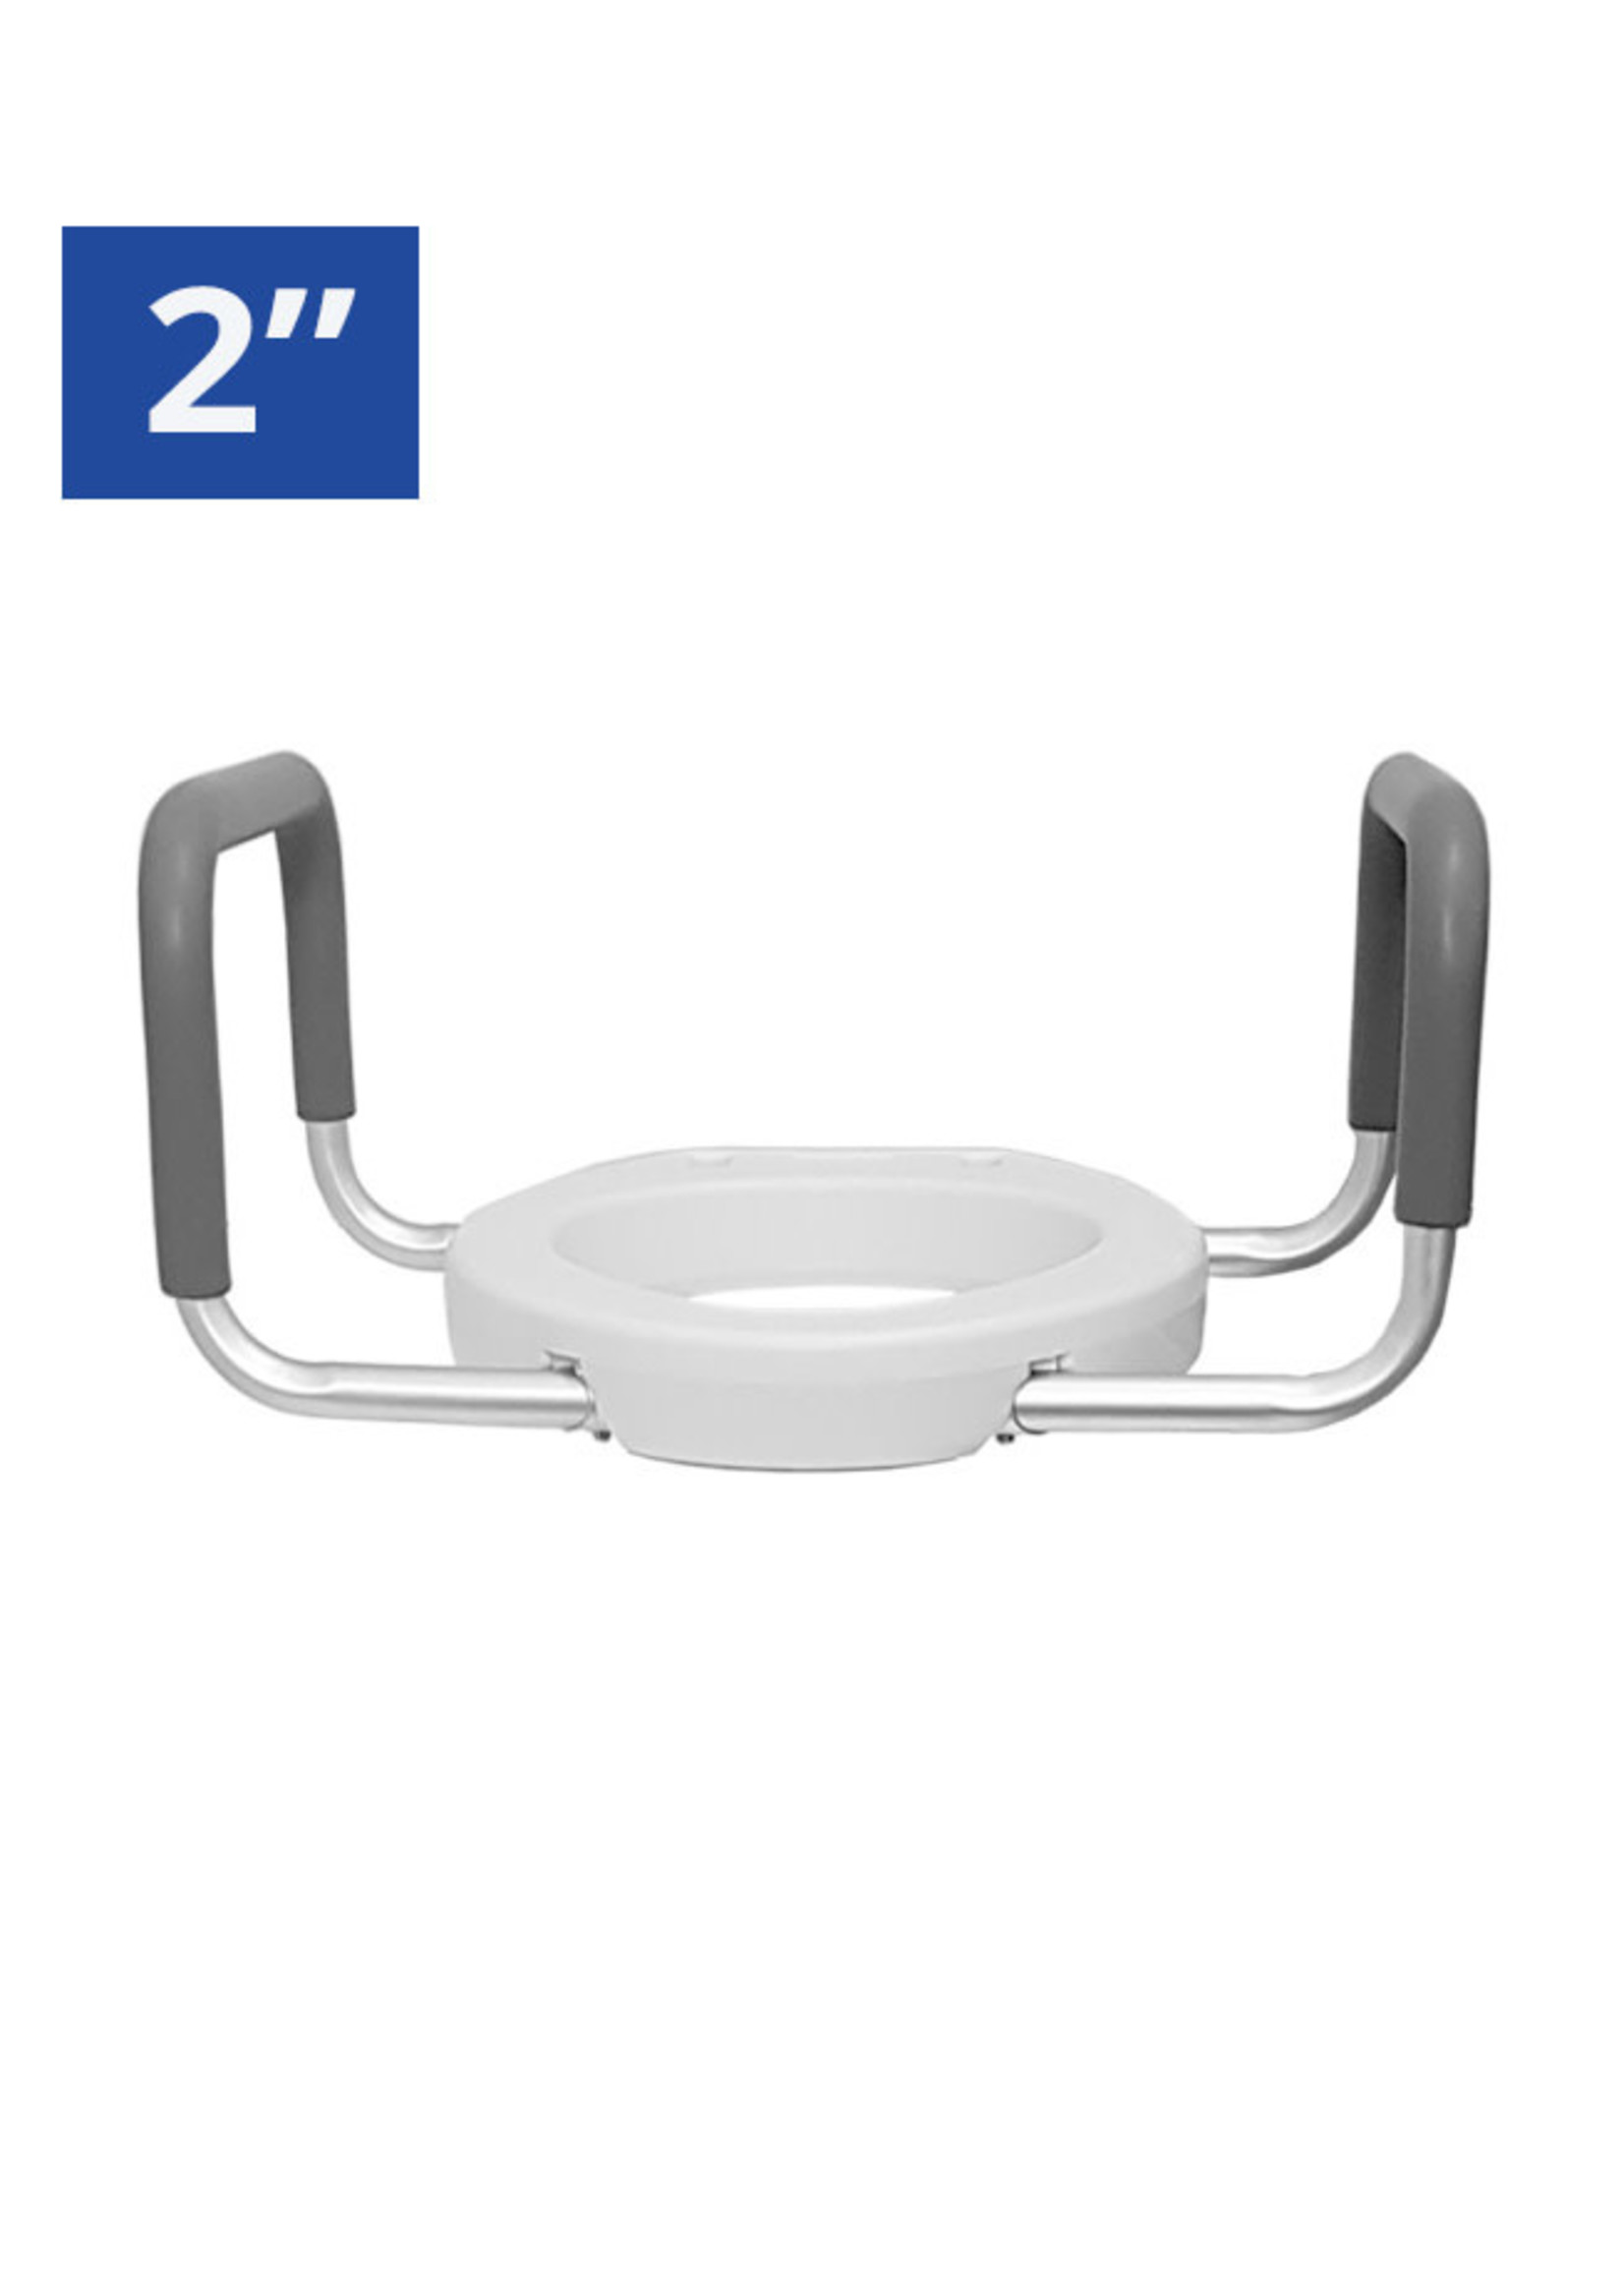 MOBB 2" Standard Raised Toilet Seat with arms  (MOBB)